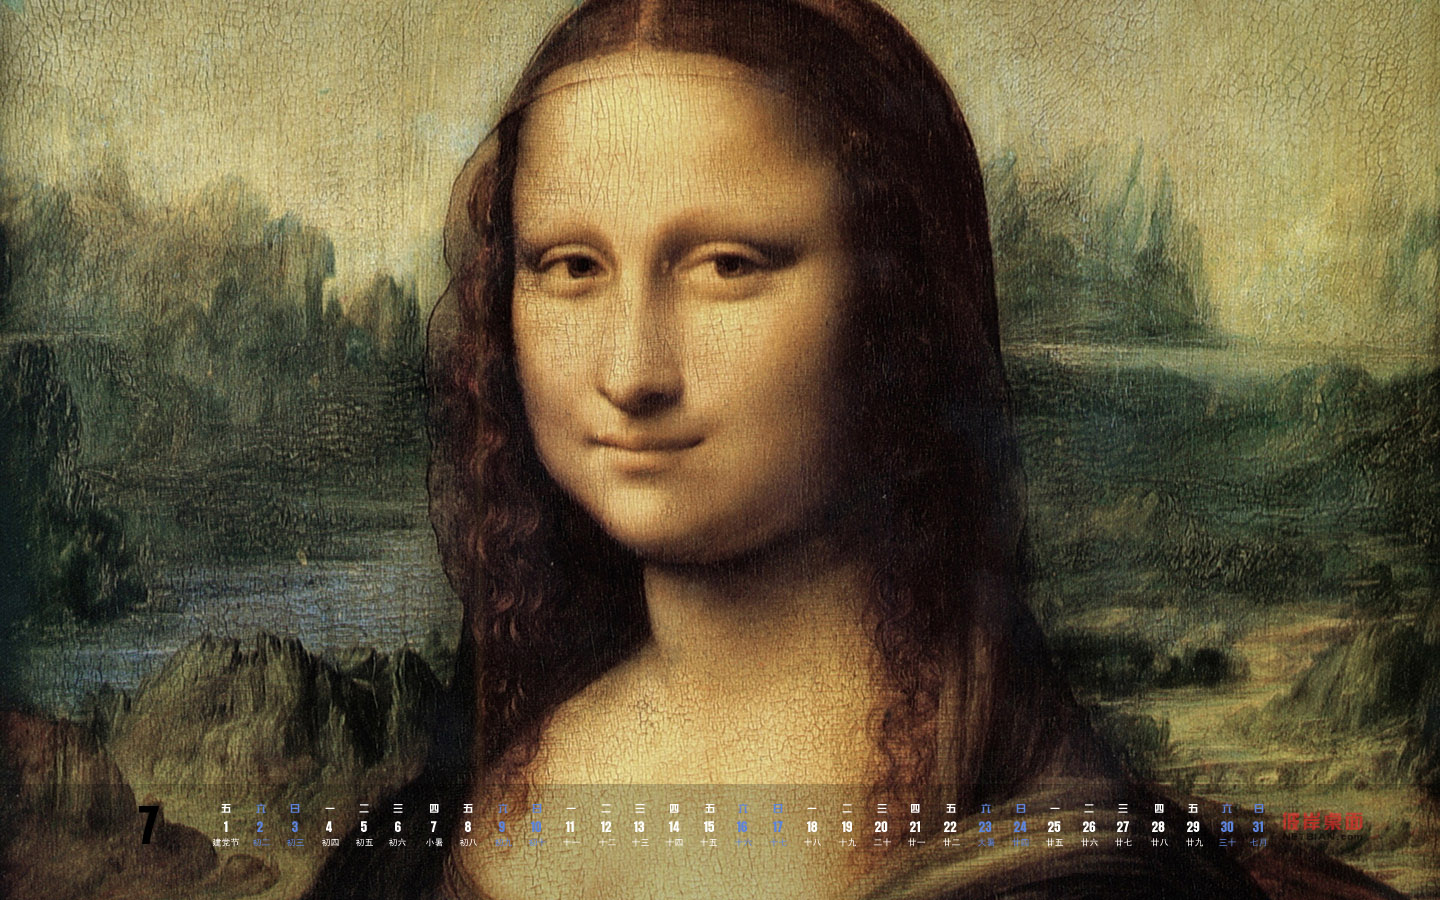 Mona Lisa smile July 2011 calendar desktop wallpaper